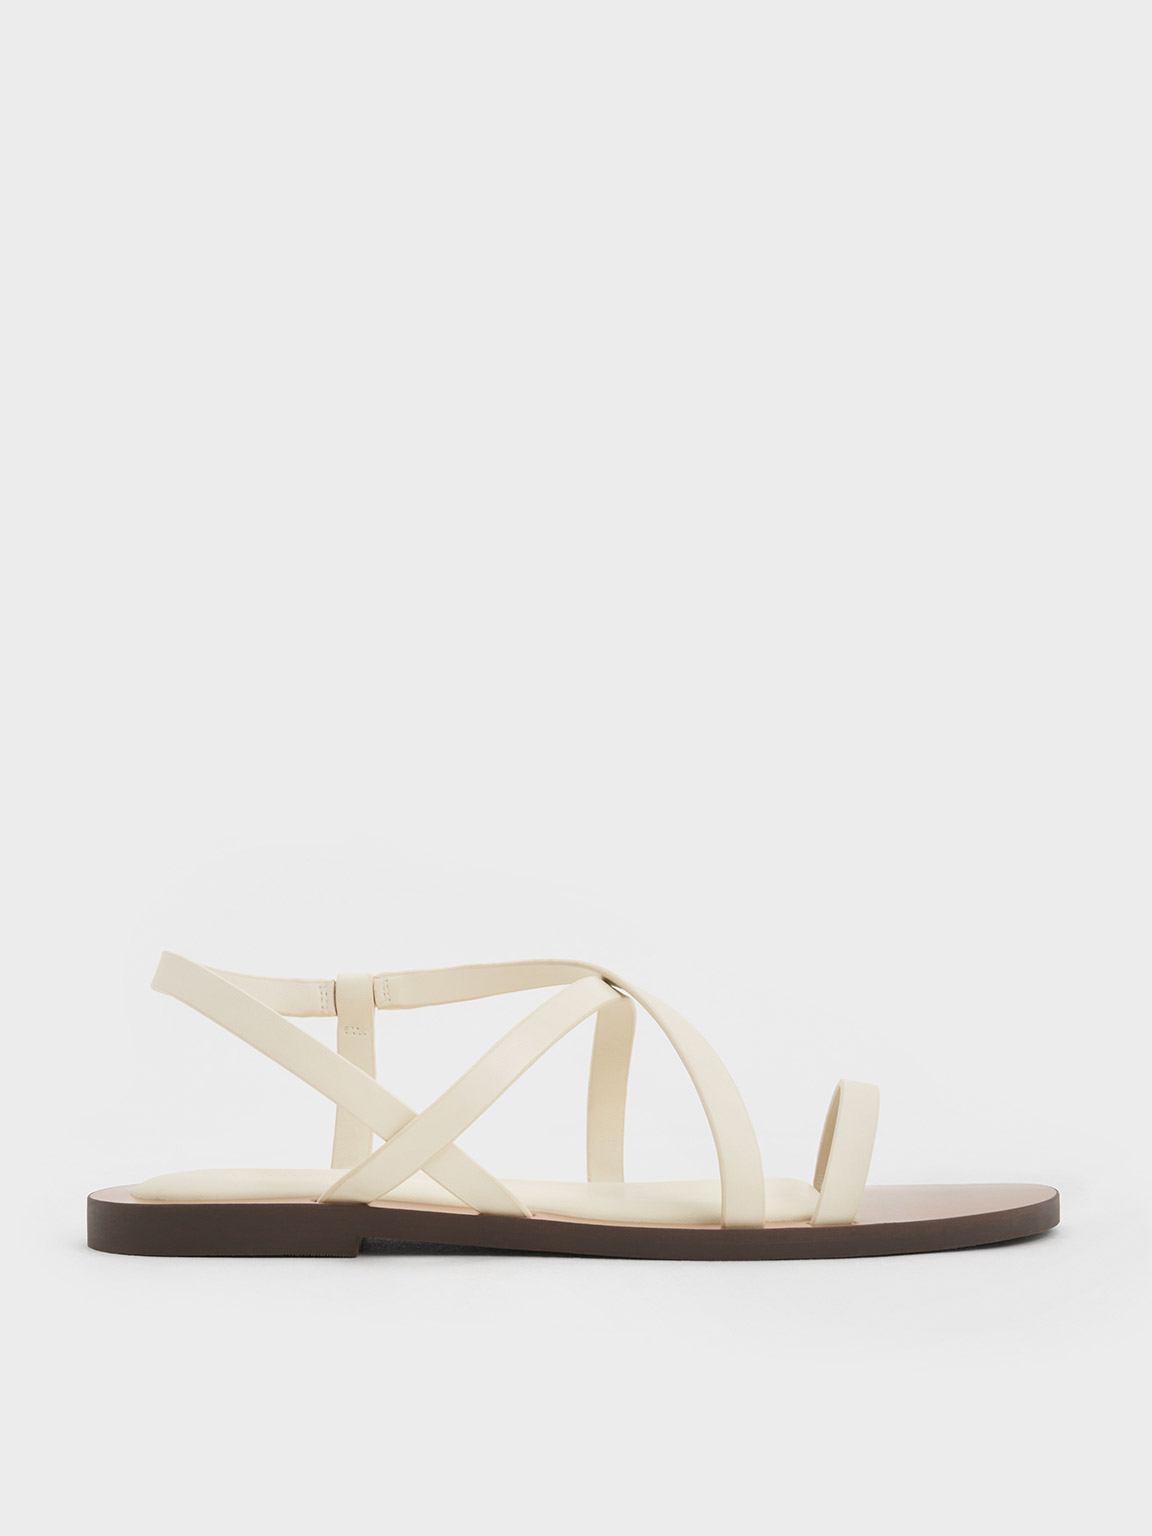 Asymmetrical Strappy Sandals